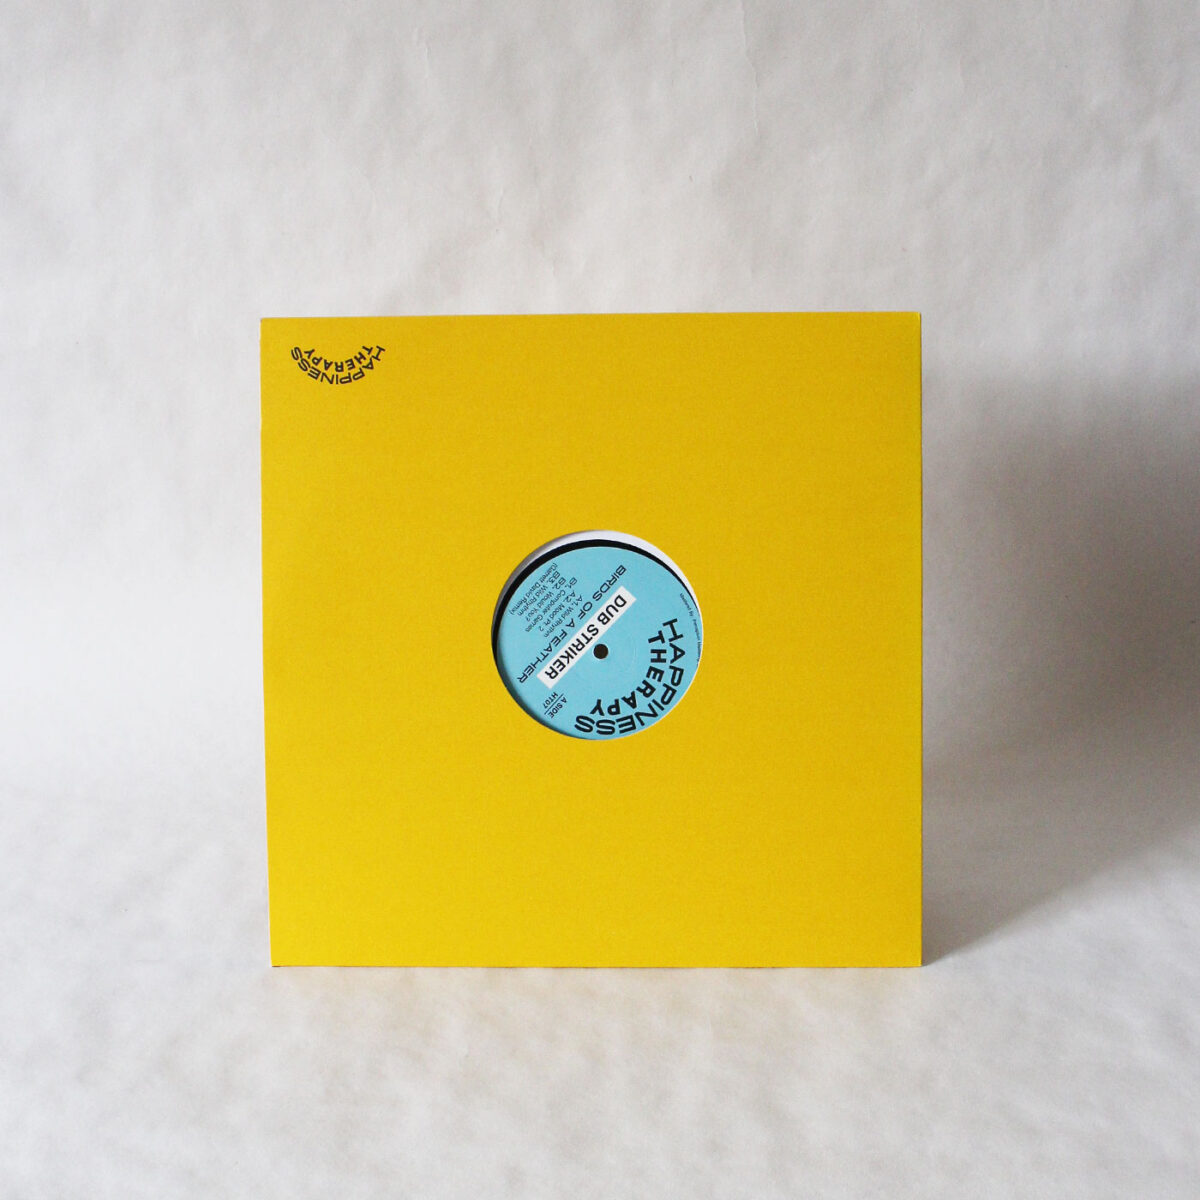 Dub Striker - Birds Of A Feather Vinyl Second Hand